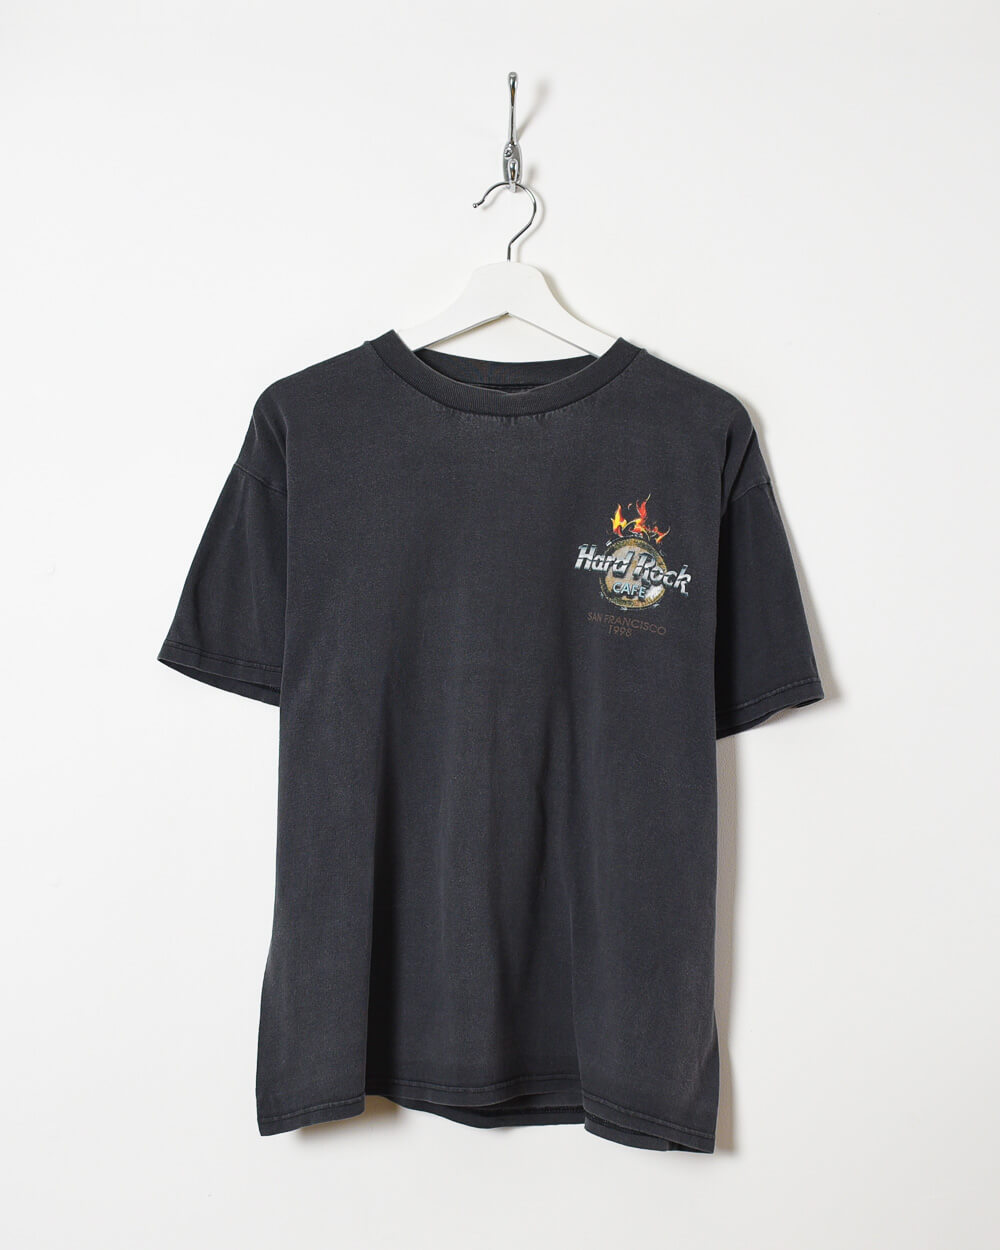 Black Hard Rock Café T-Shirt - Medium